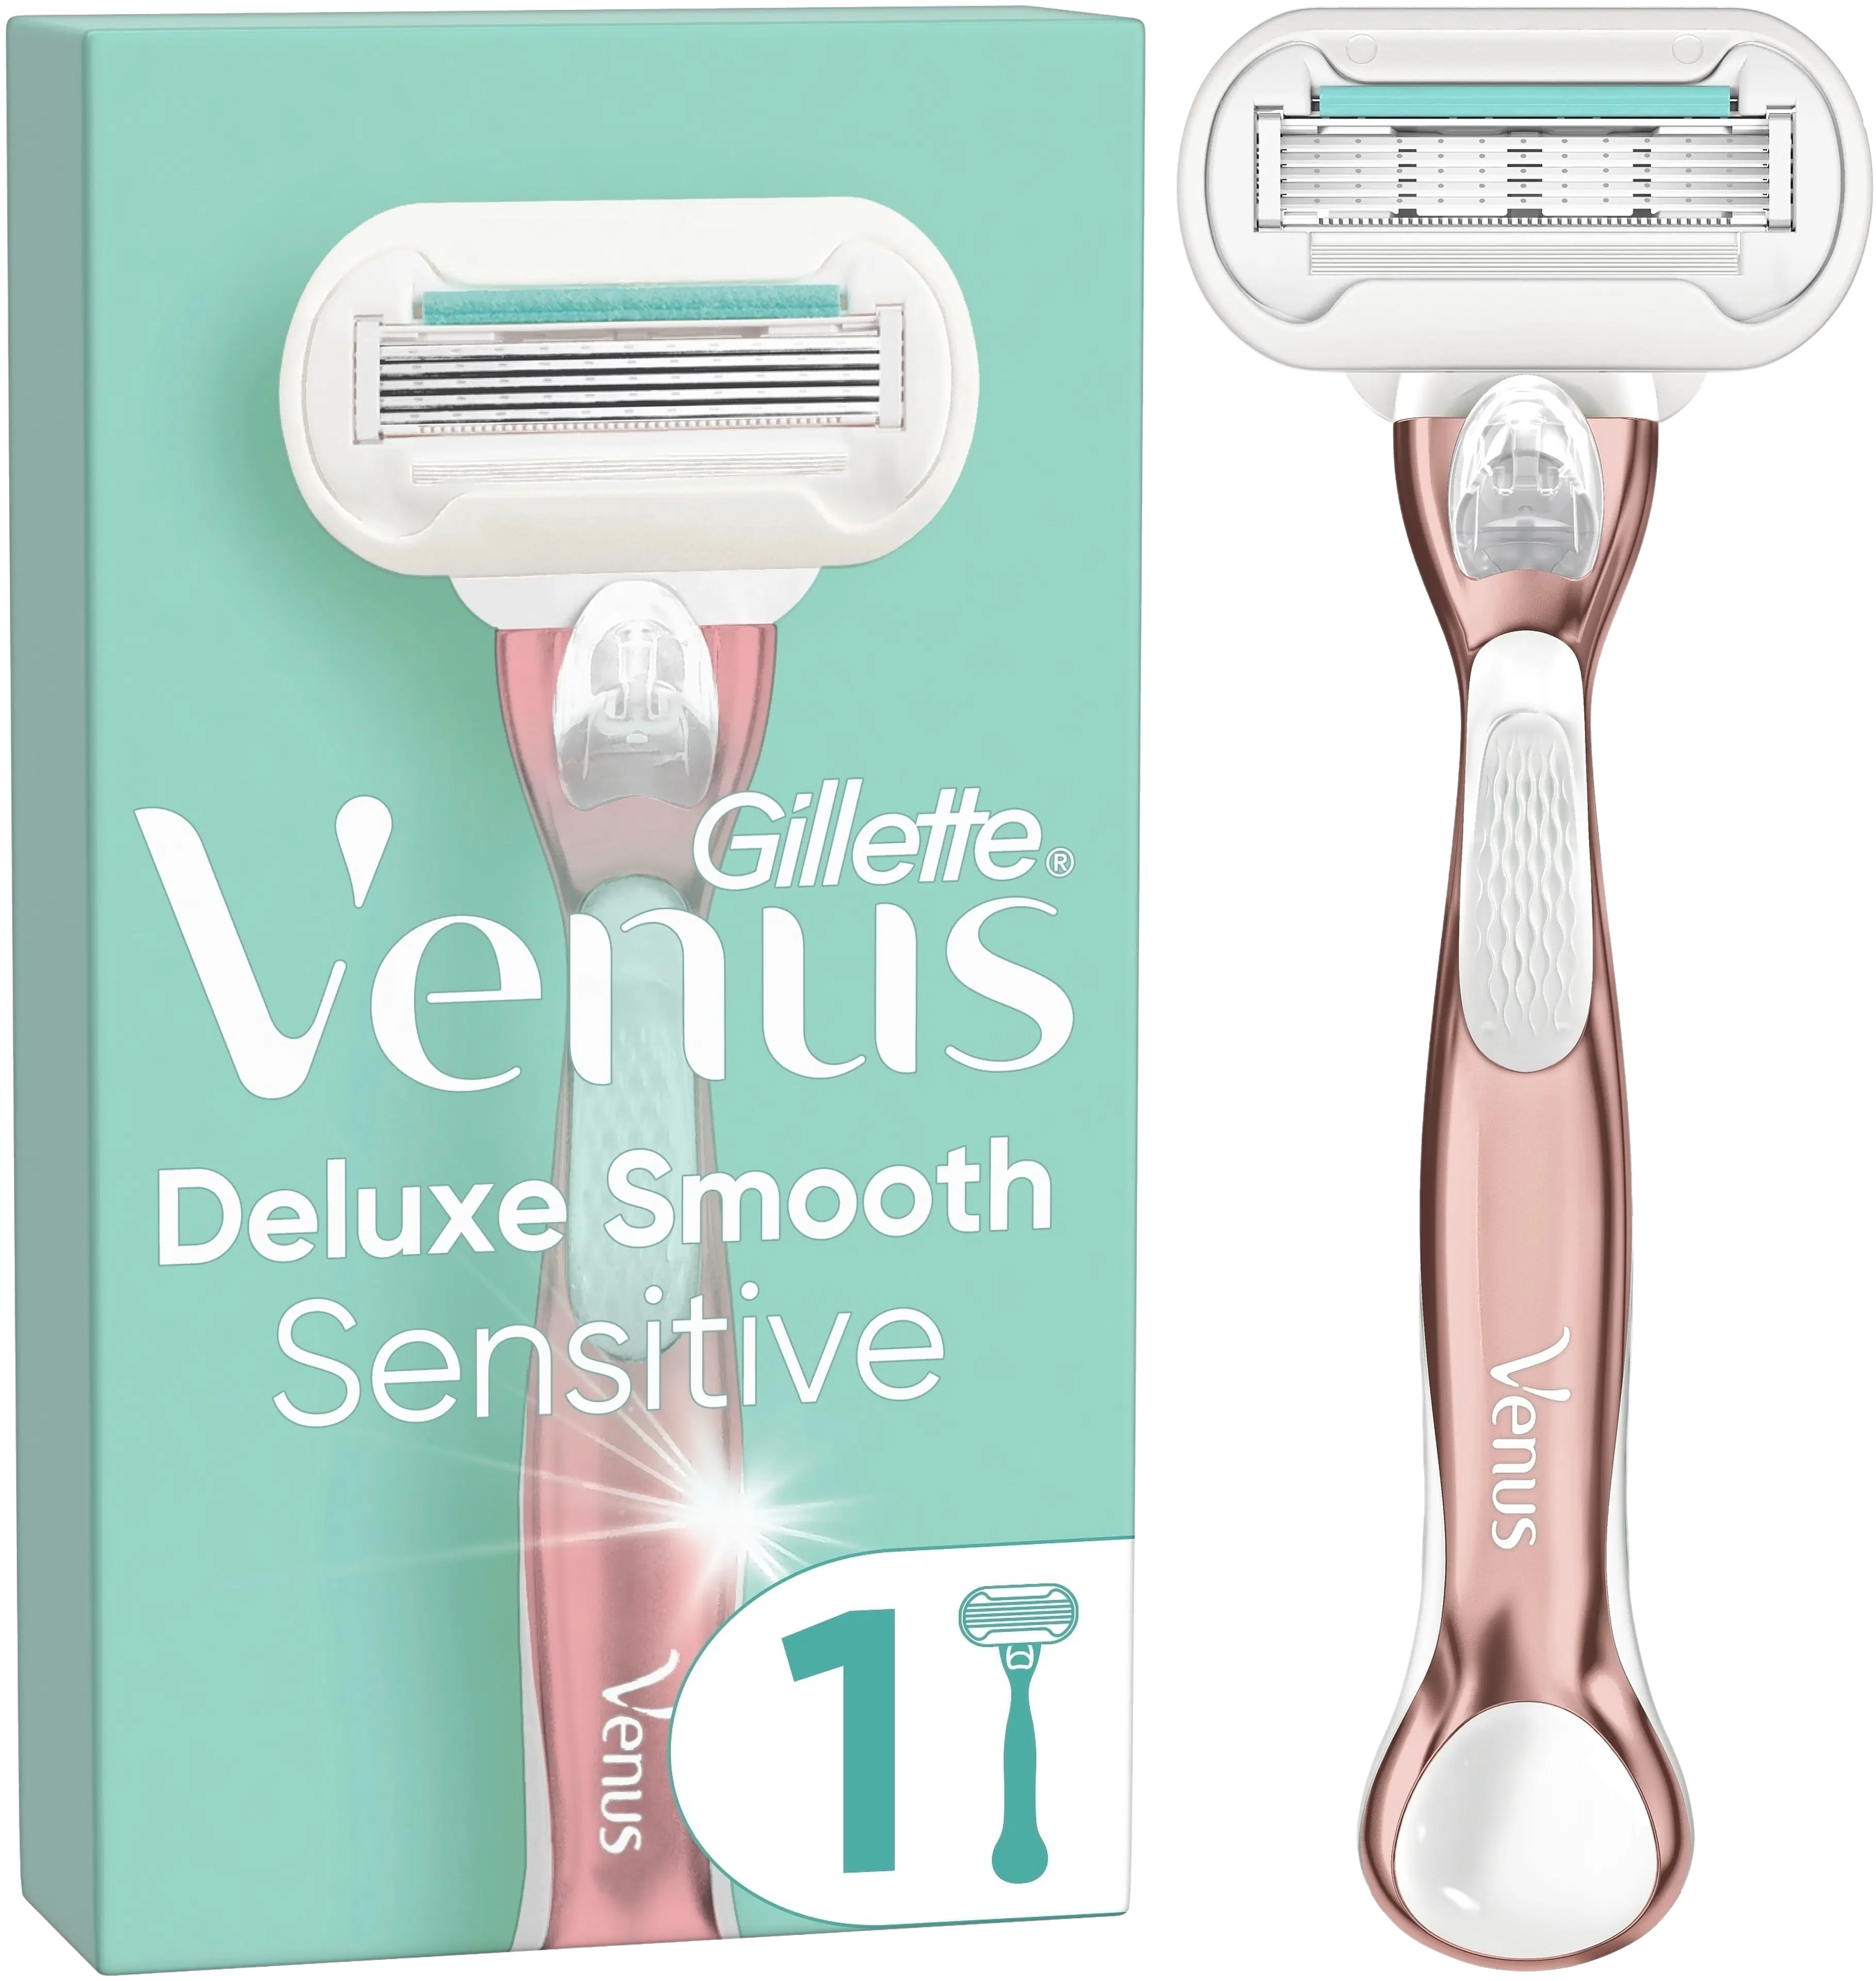 Gillette Venus Deluxe Smooth Sensitive Rosegold ihokarvanajohöylä